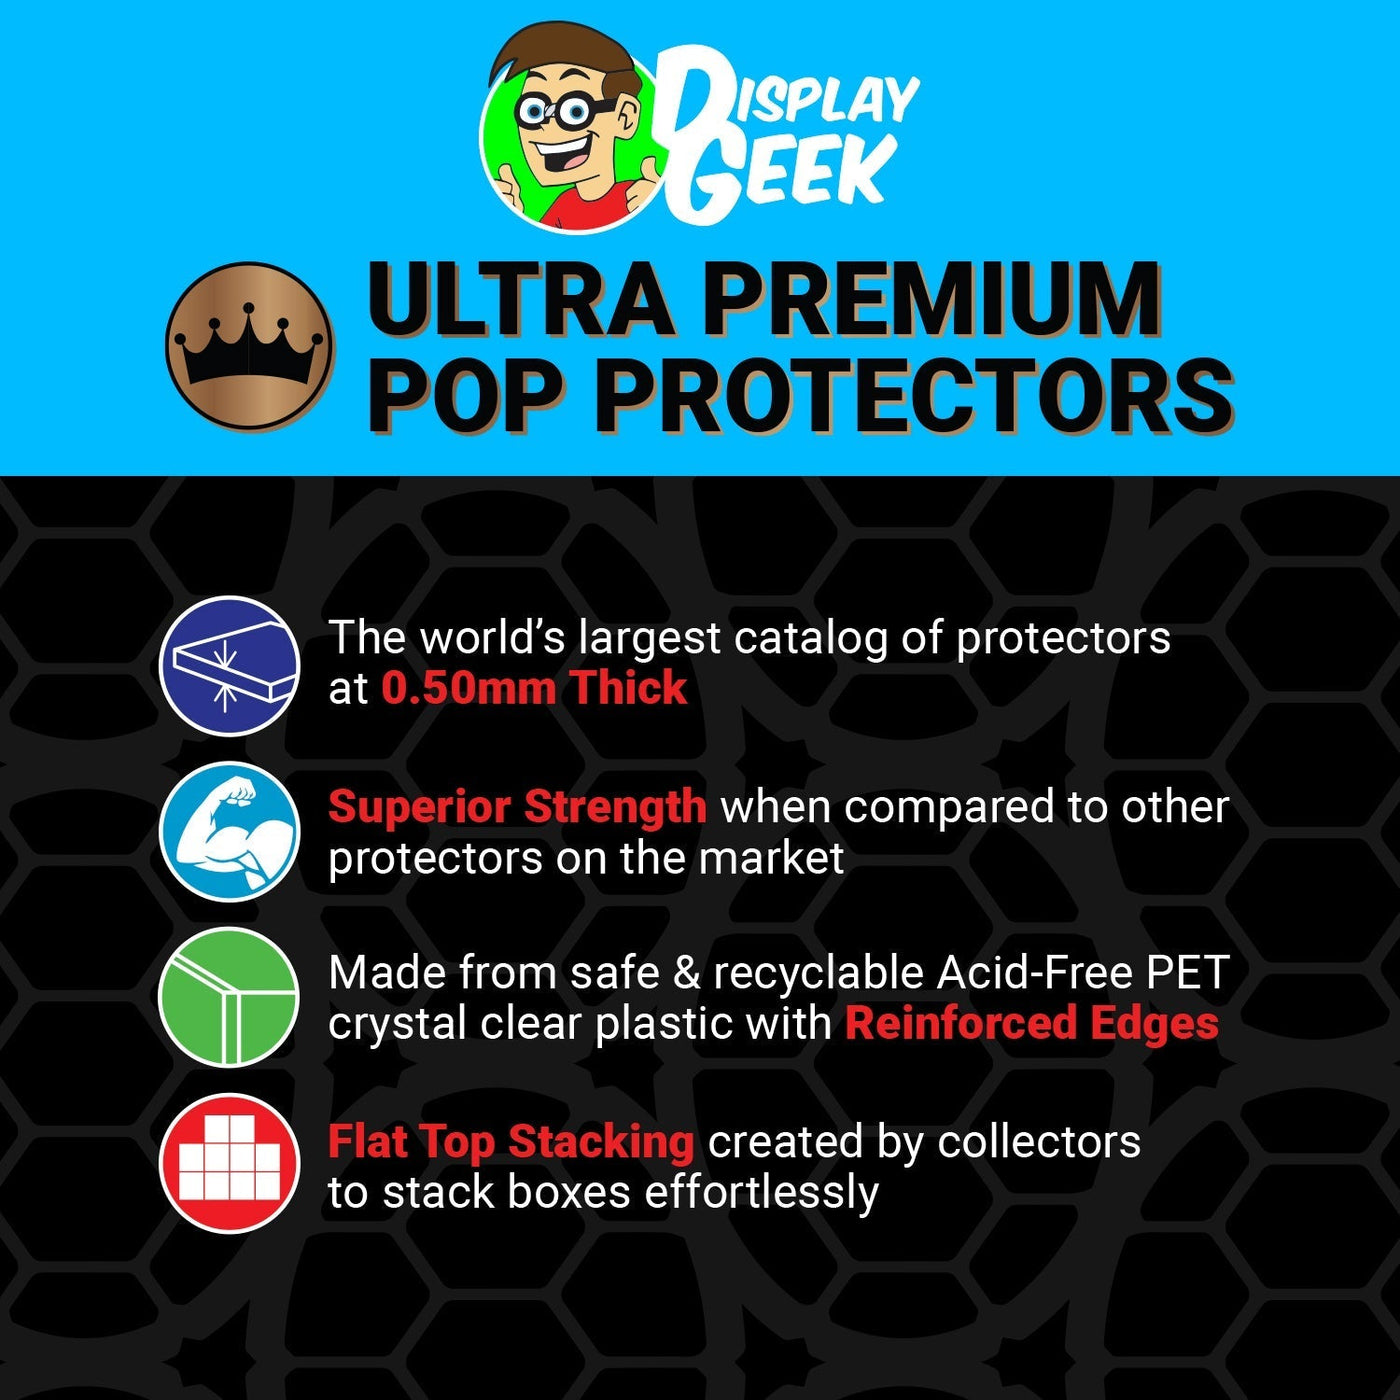 Pop Protector for 4 Pack Queen Freddie Mercury, Brian, Roger & John Funko Pop on The Protector Guide App by Display Geek